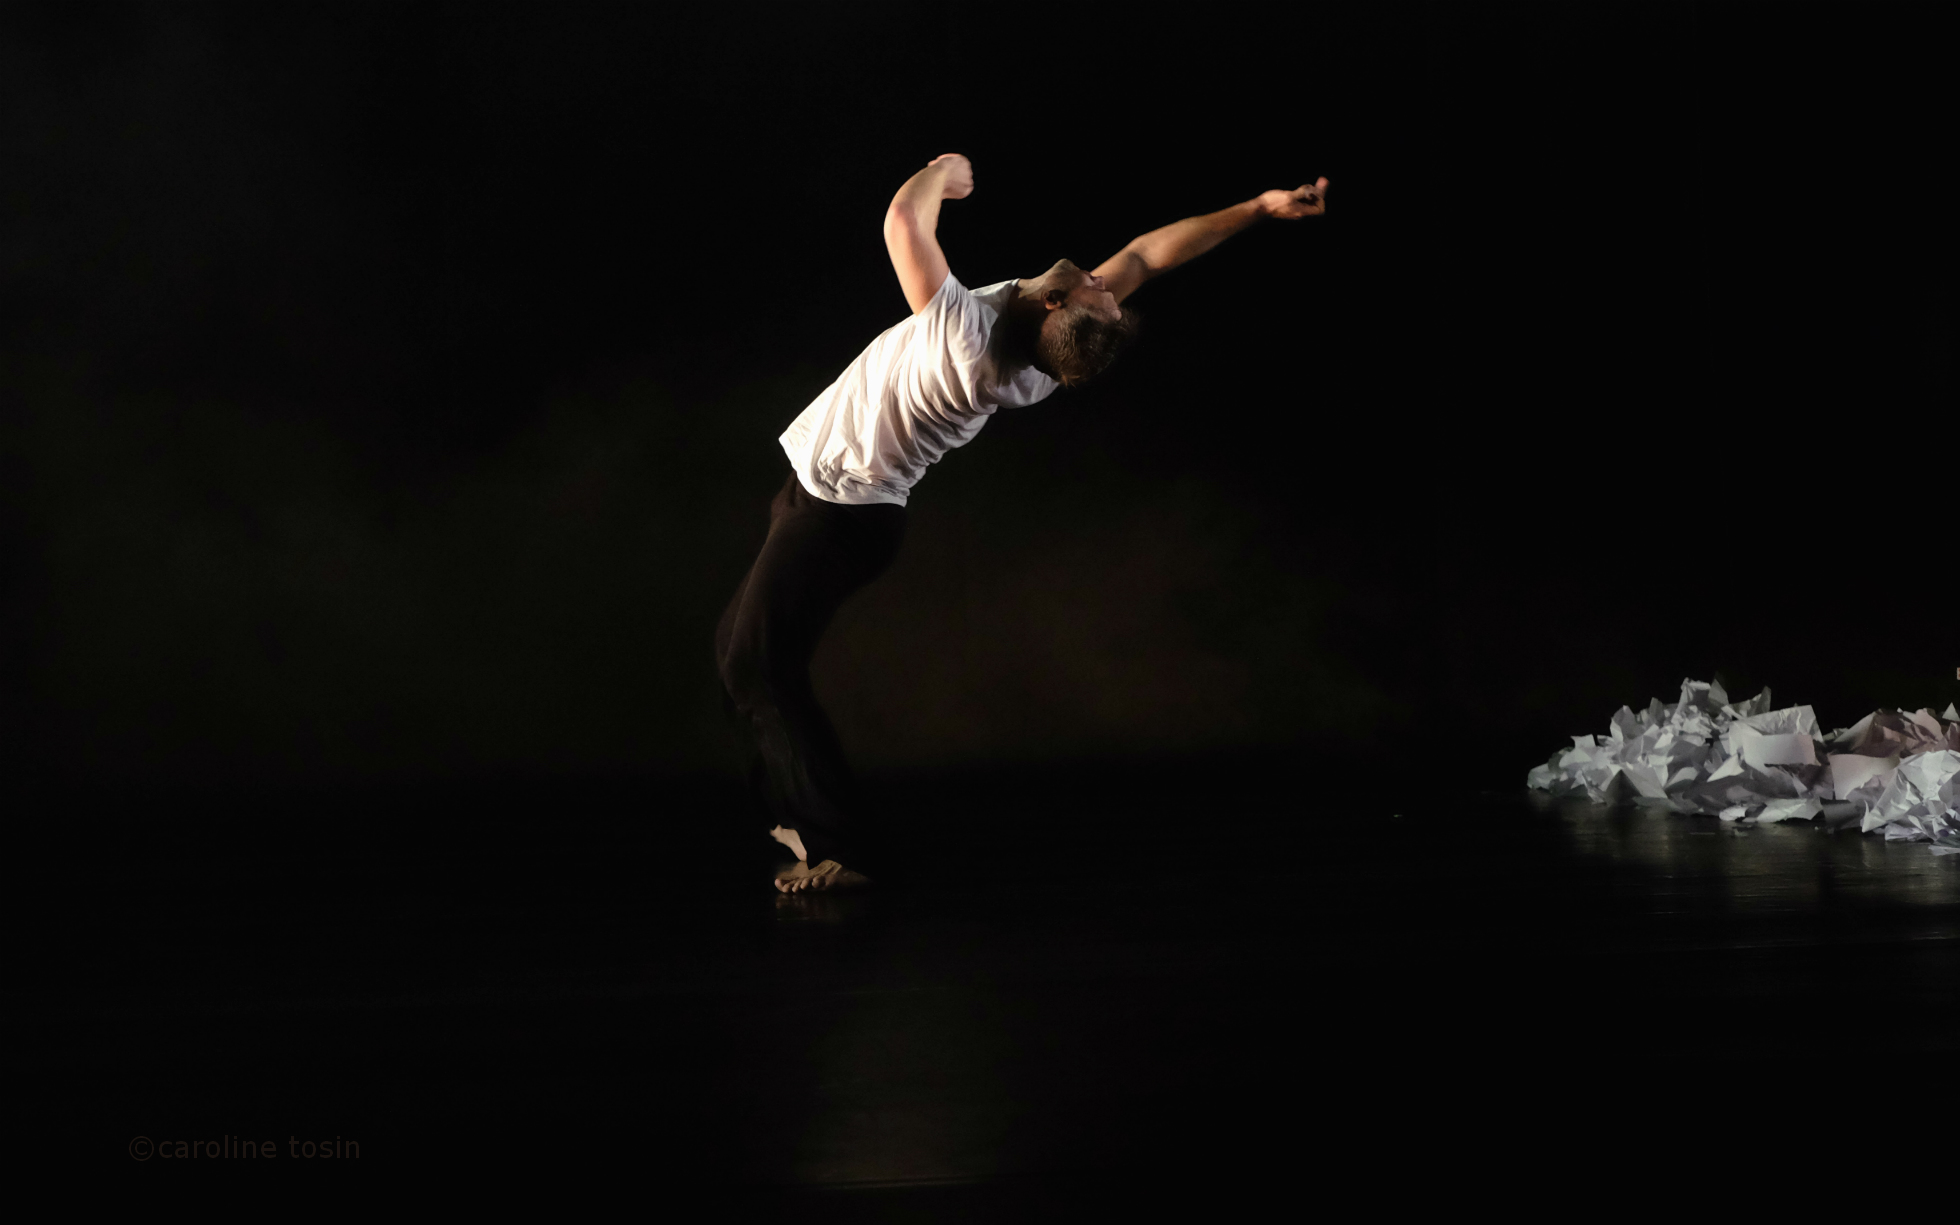  Dancer: Vince Virr. &nbsp;Photo: Caroline Tosin. 